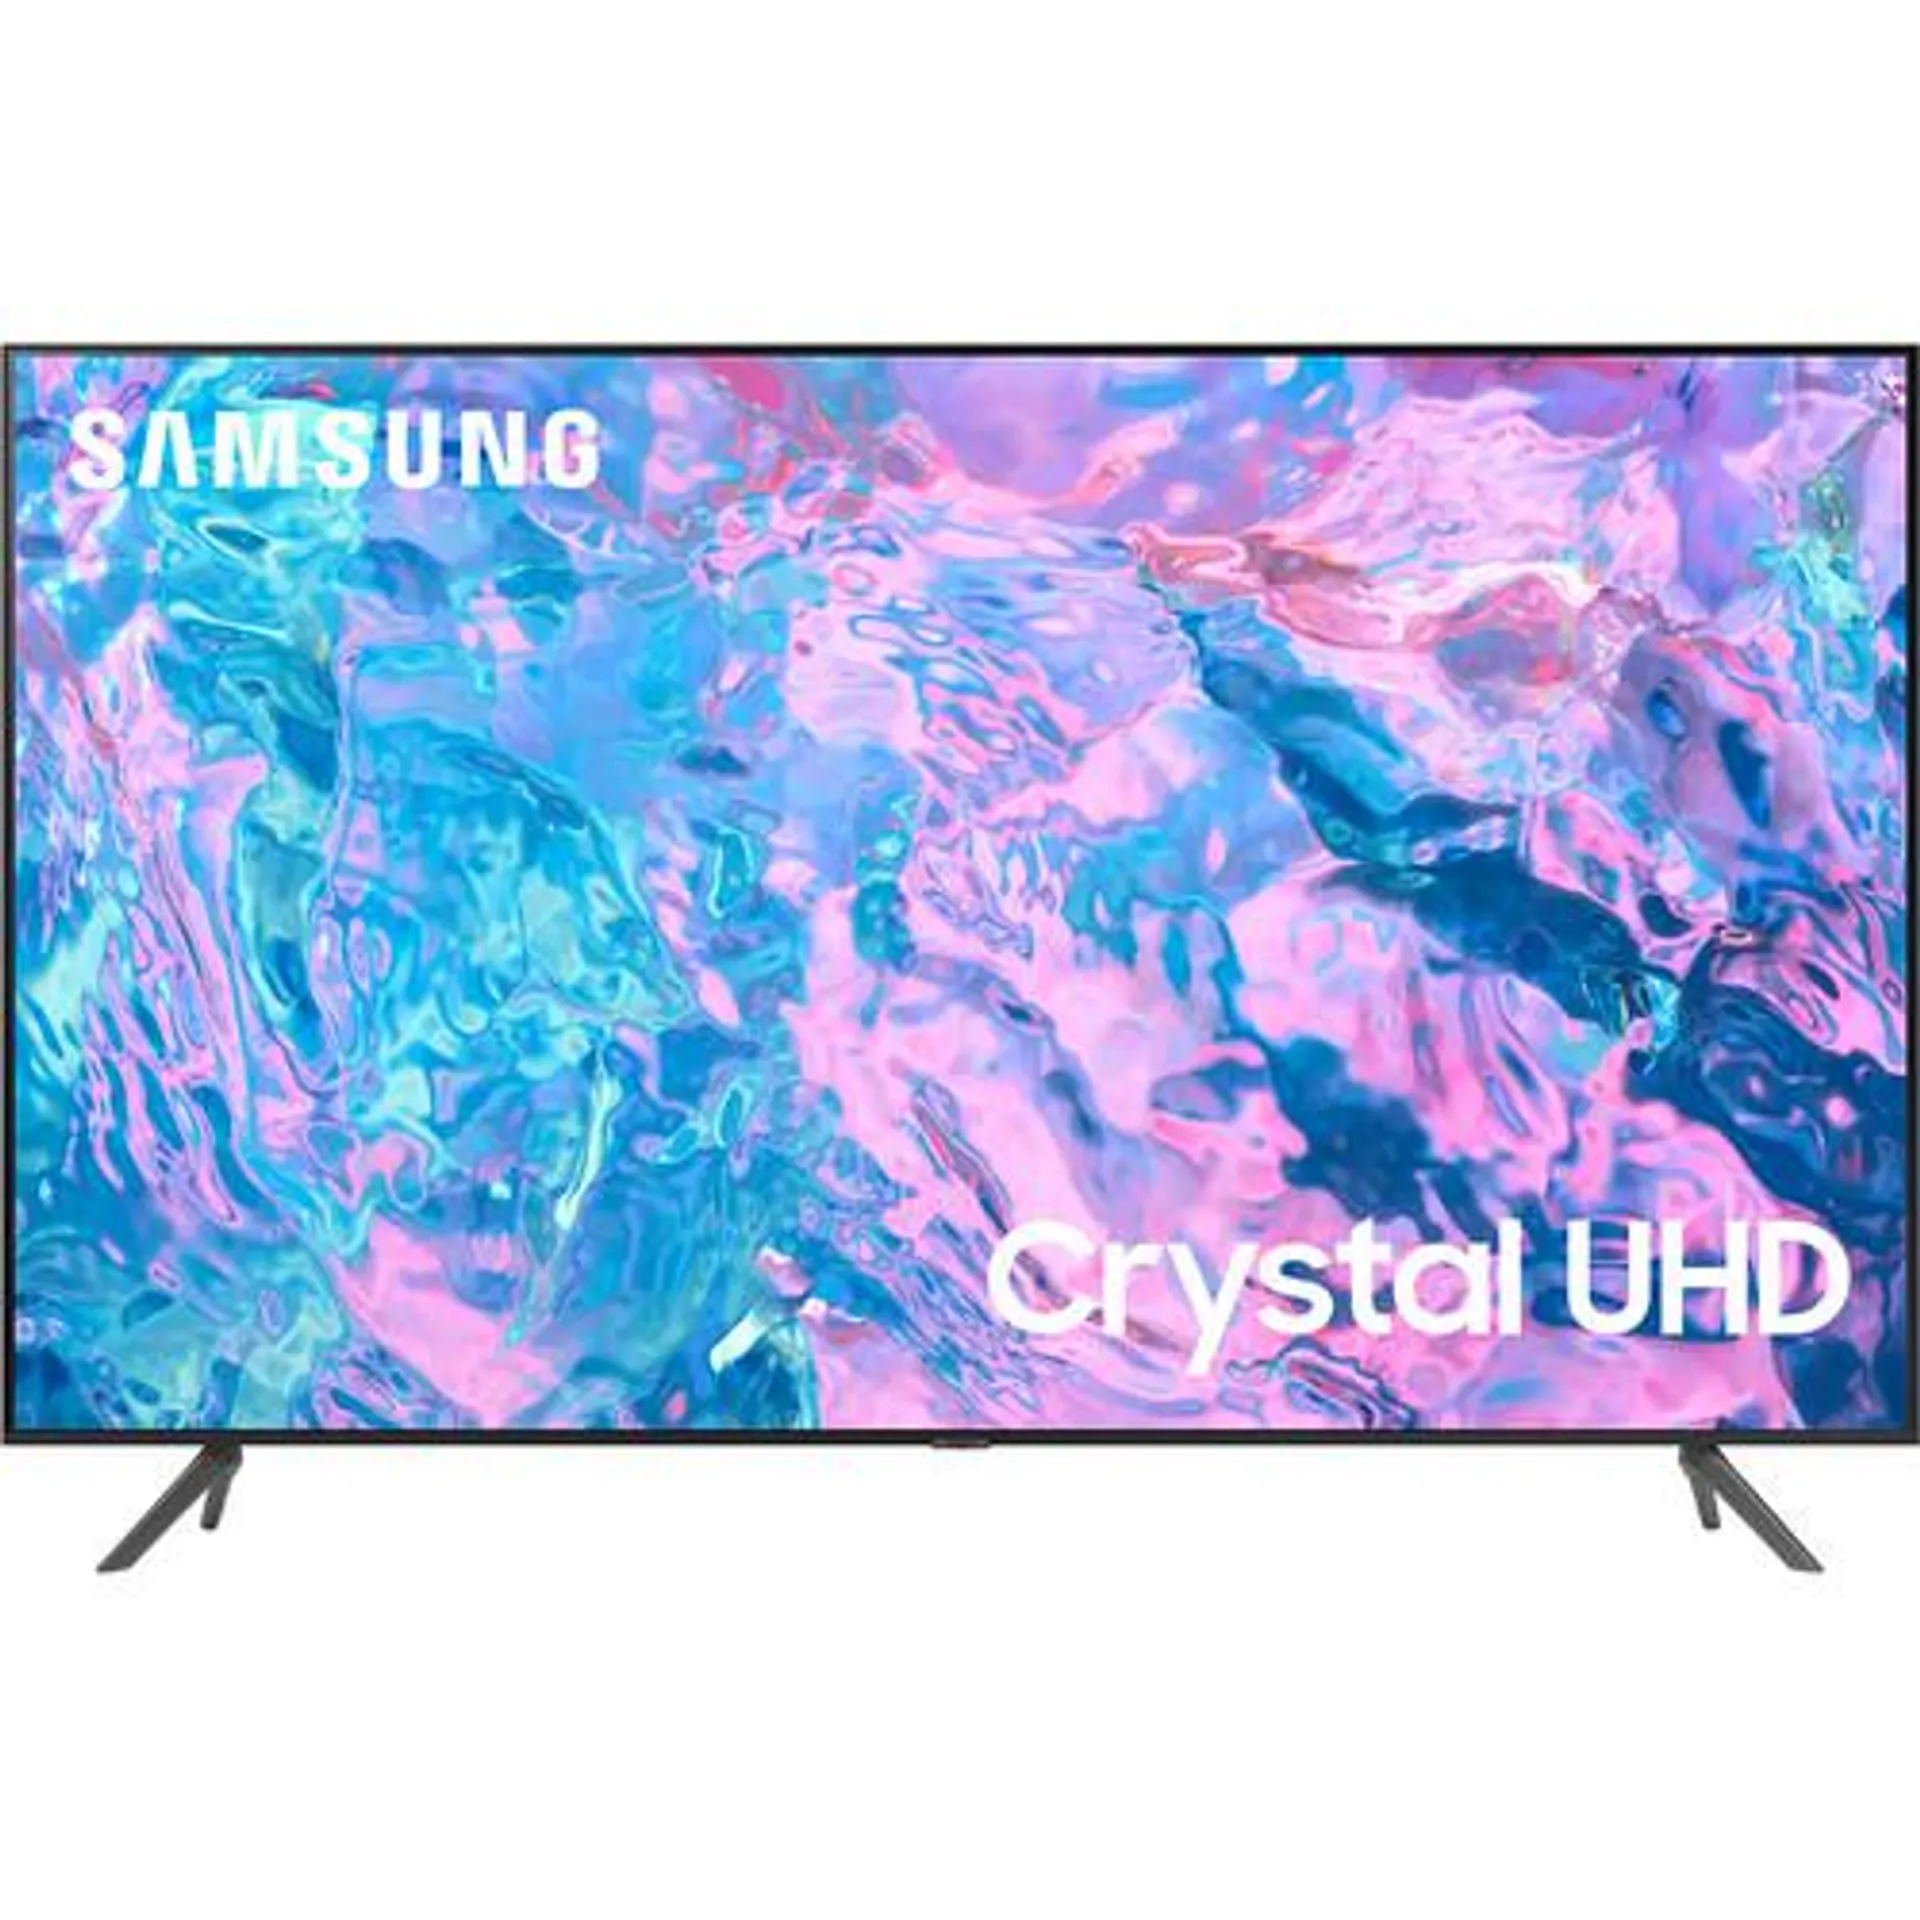 Samsung CU7000 Crystal UHD 85" 4K HDR Smart LED TV